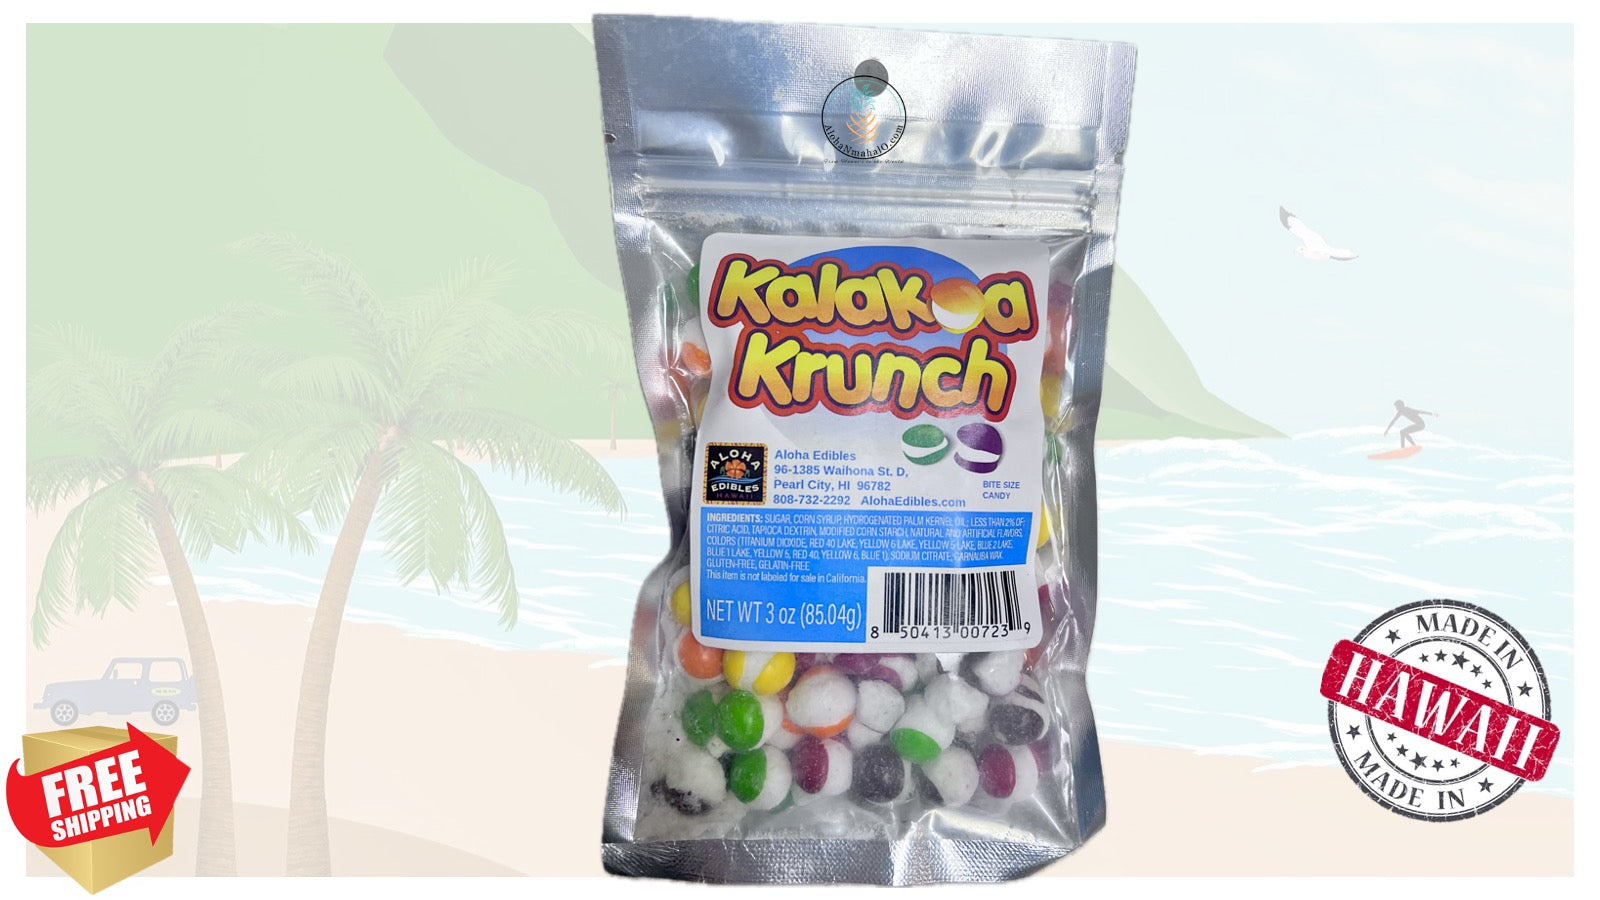 Kalakoa Krunch Reg Tropical Candy Mix - Gluten-Free, Gelatin-Free Bite-Size Sweets from Hawaii - 3 oz Bag